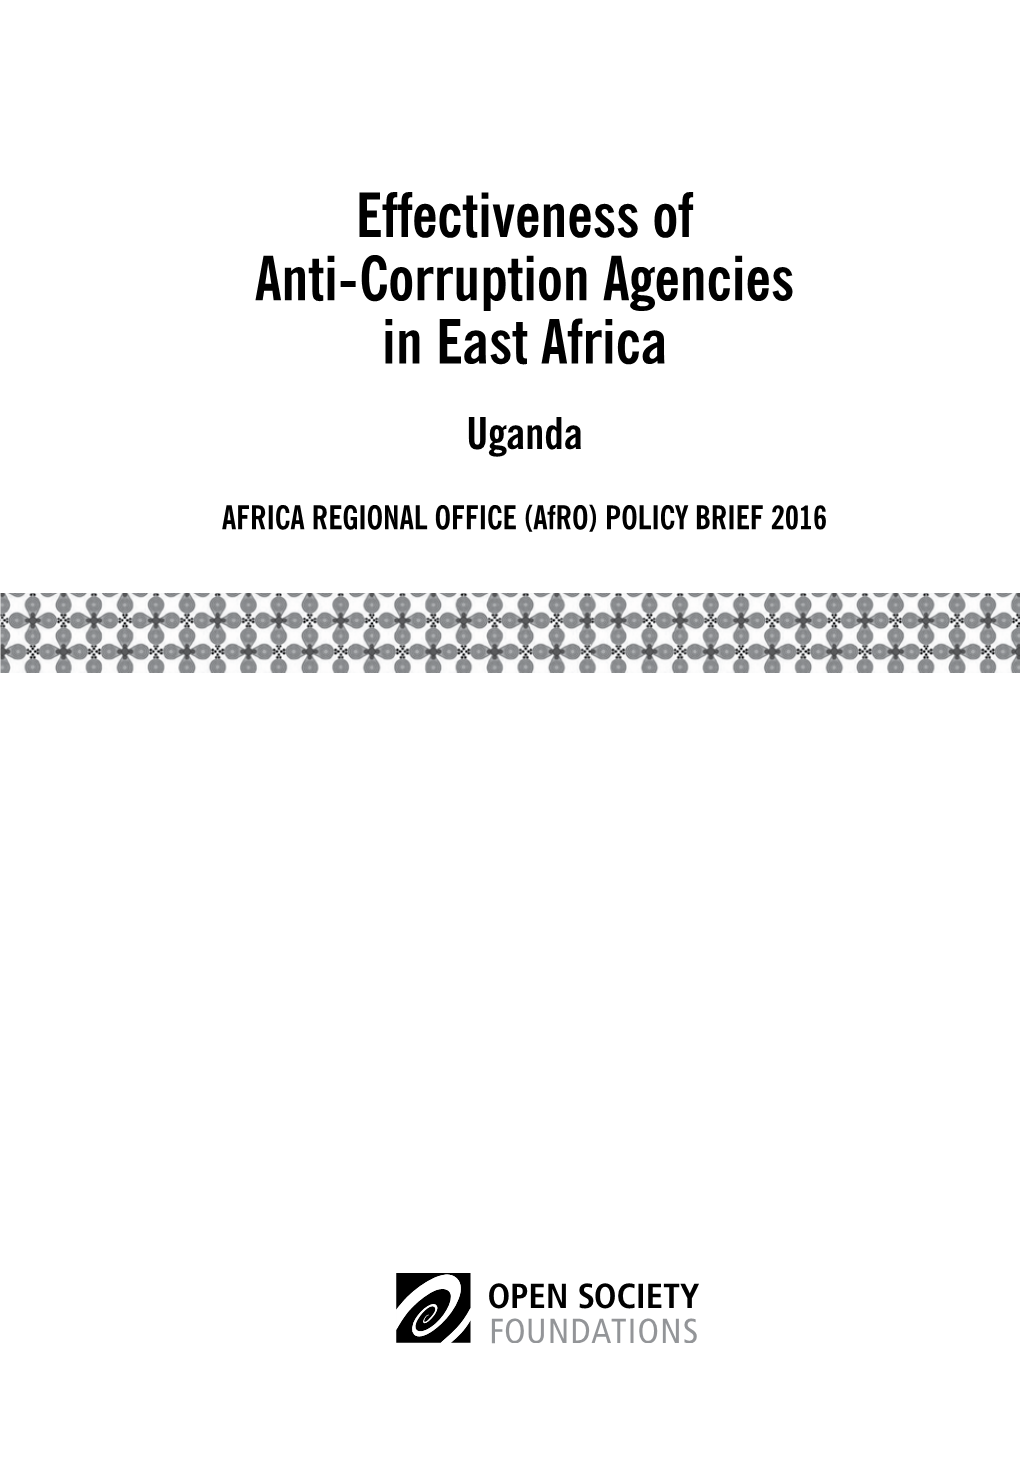 Effectiveness of Anti-Corruption Agencies in East Africa—Uganda